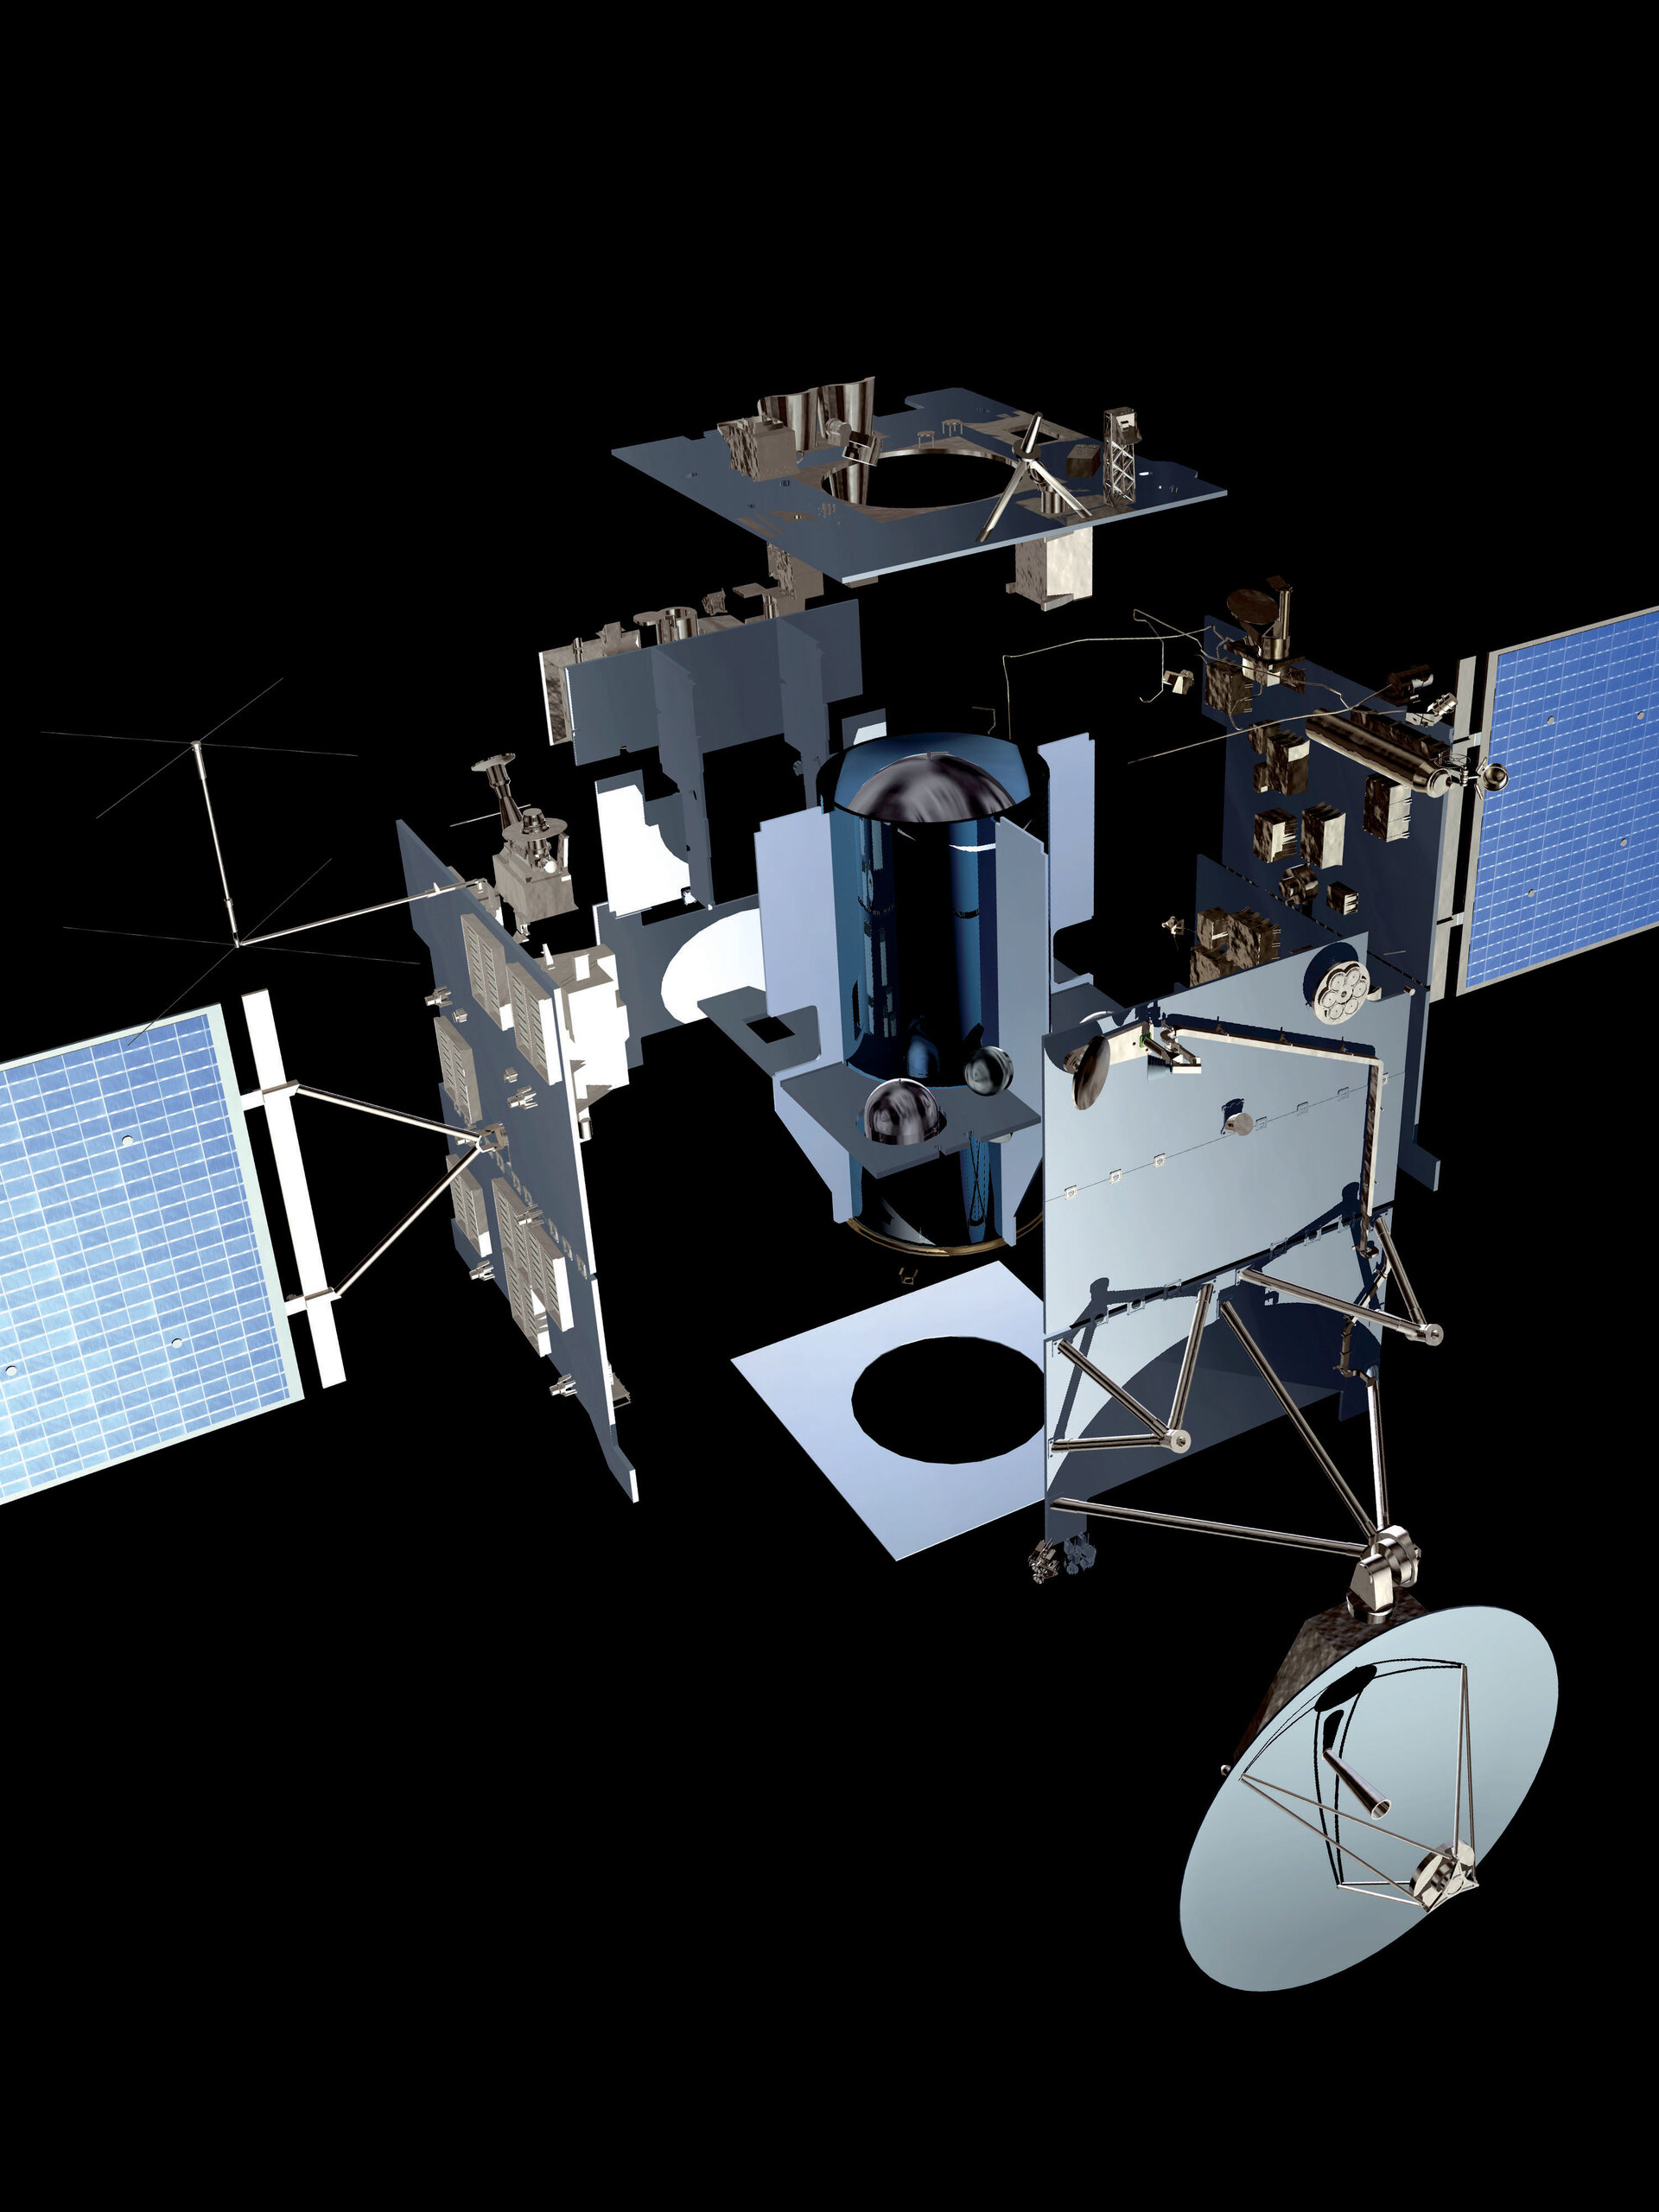 The launch of Rosetta has been postponed